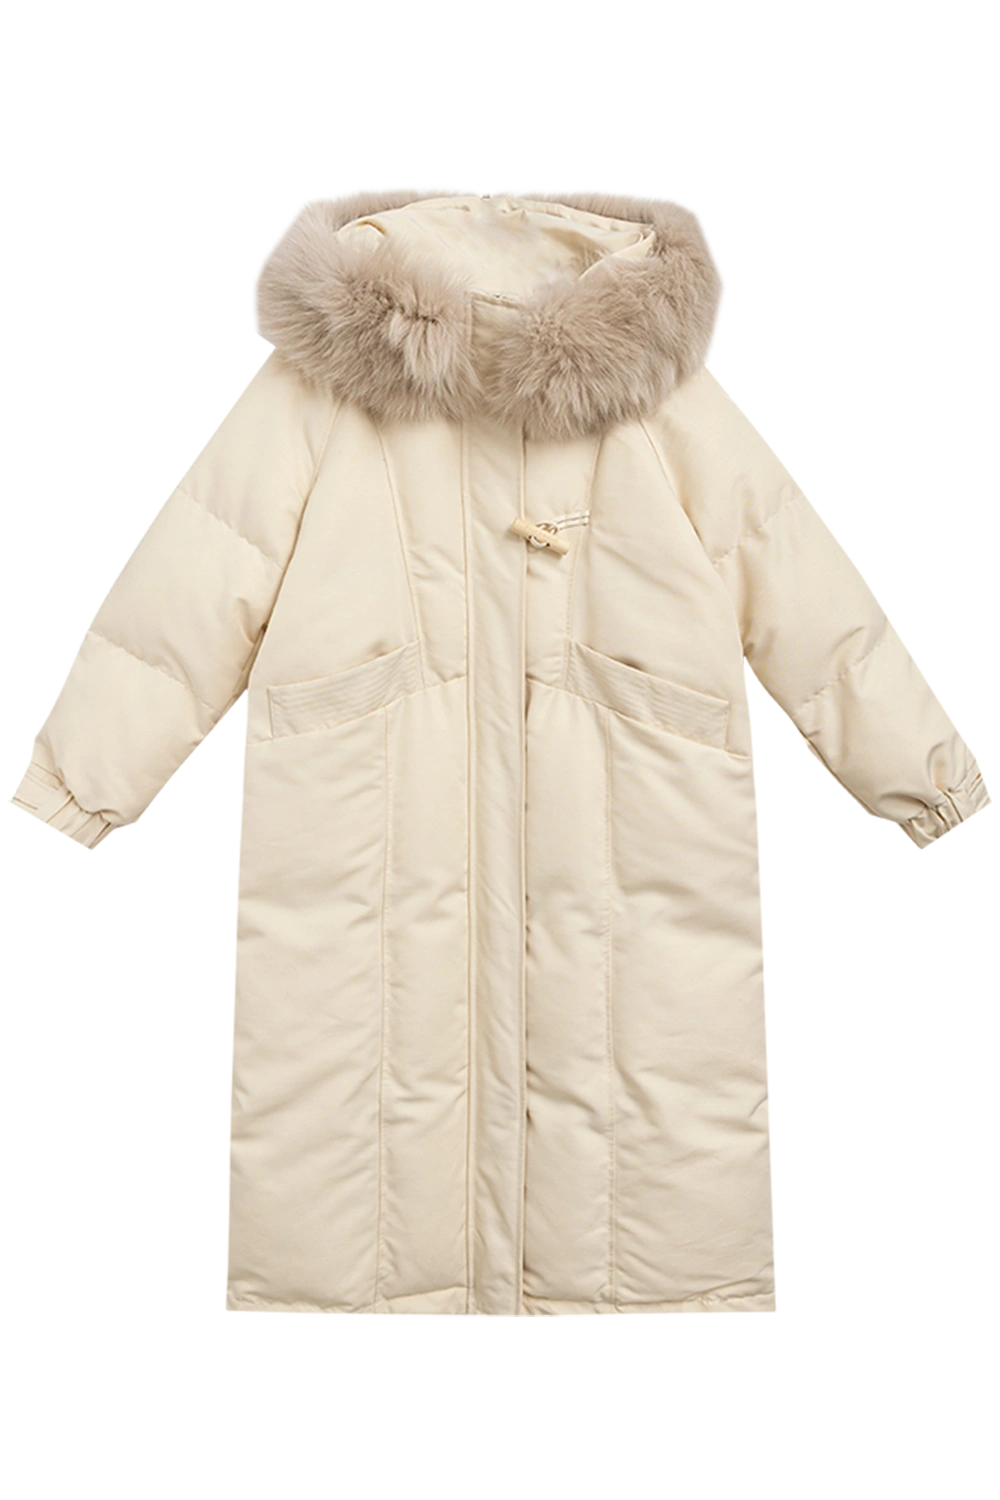 Women's Long Down Coat with Faux Fur Hood - Winter Puffer Jacket